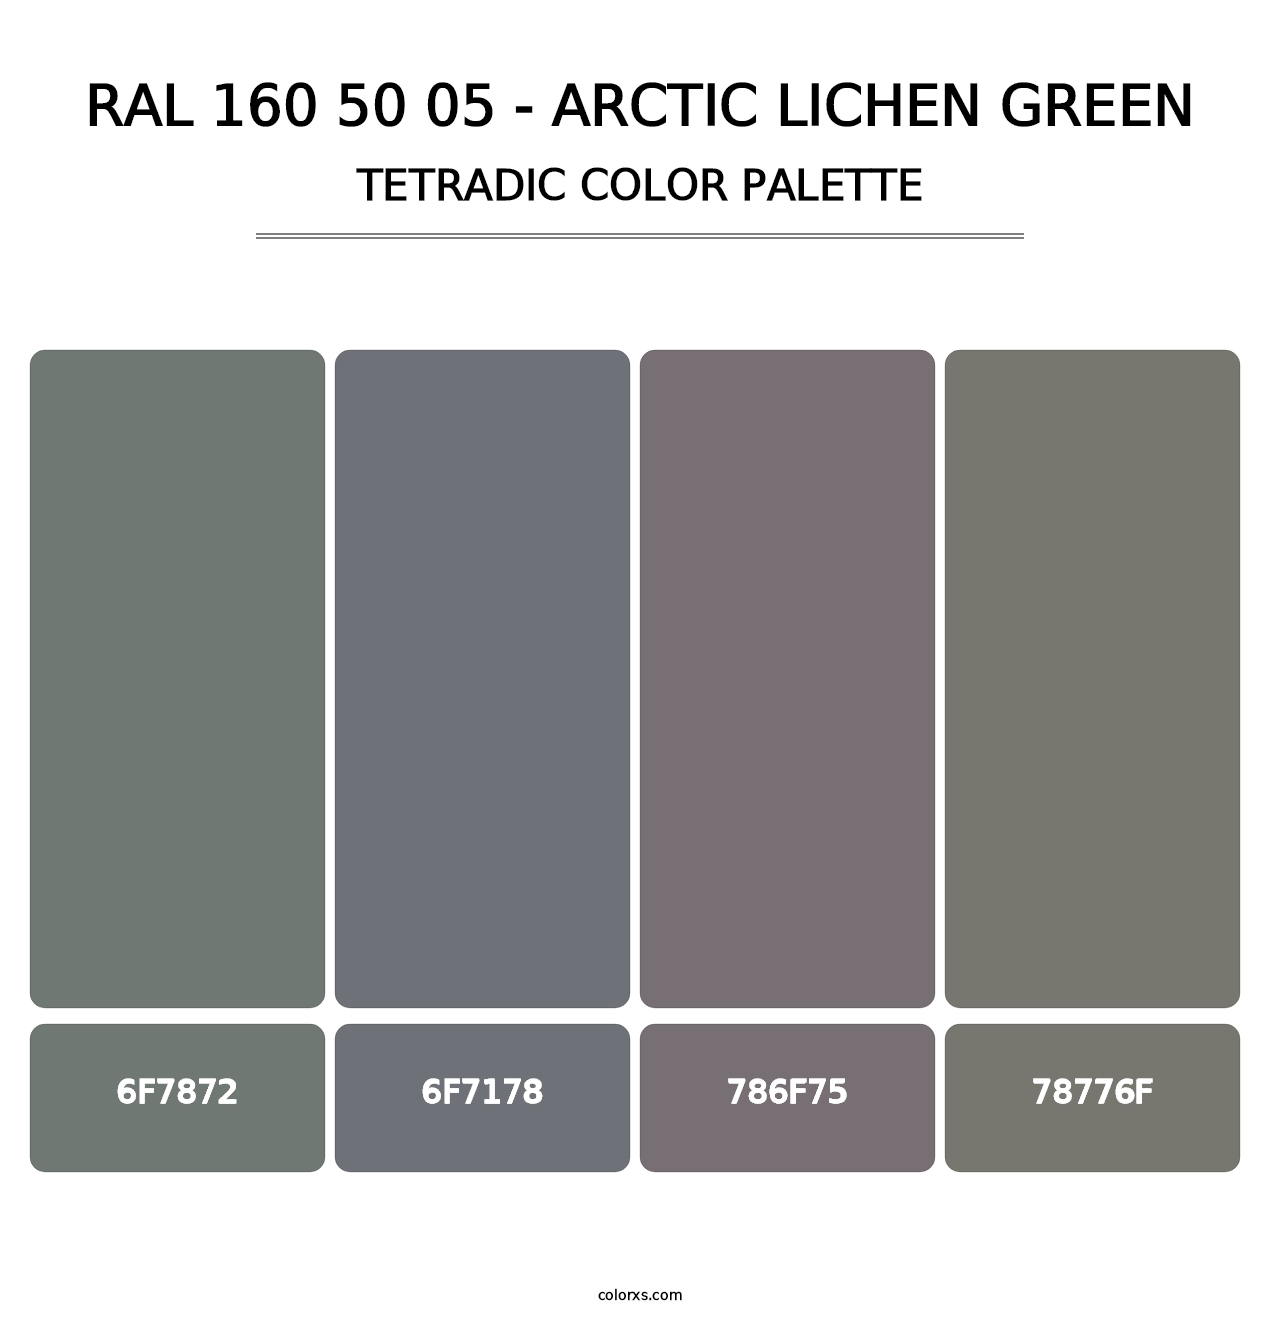 RAL 160 50 05 - Arctic Lichen Green - Tetradic Color Palette